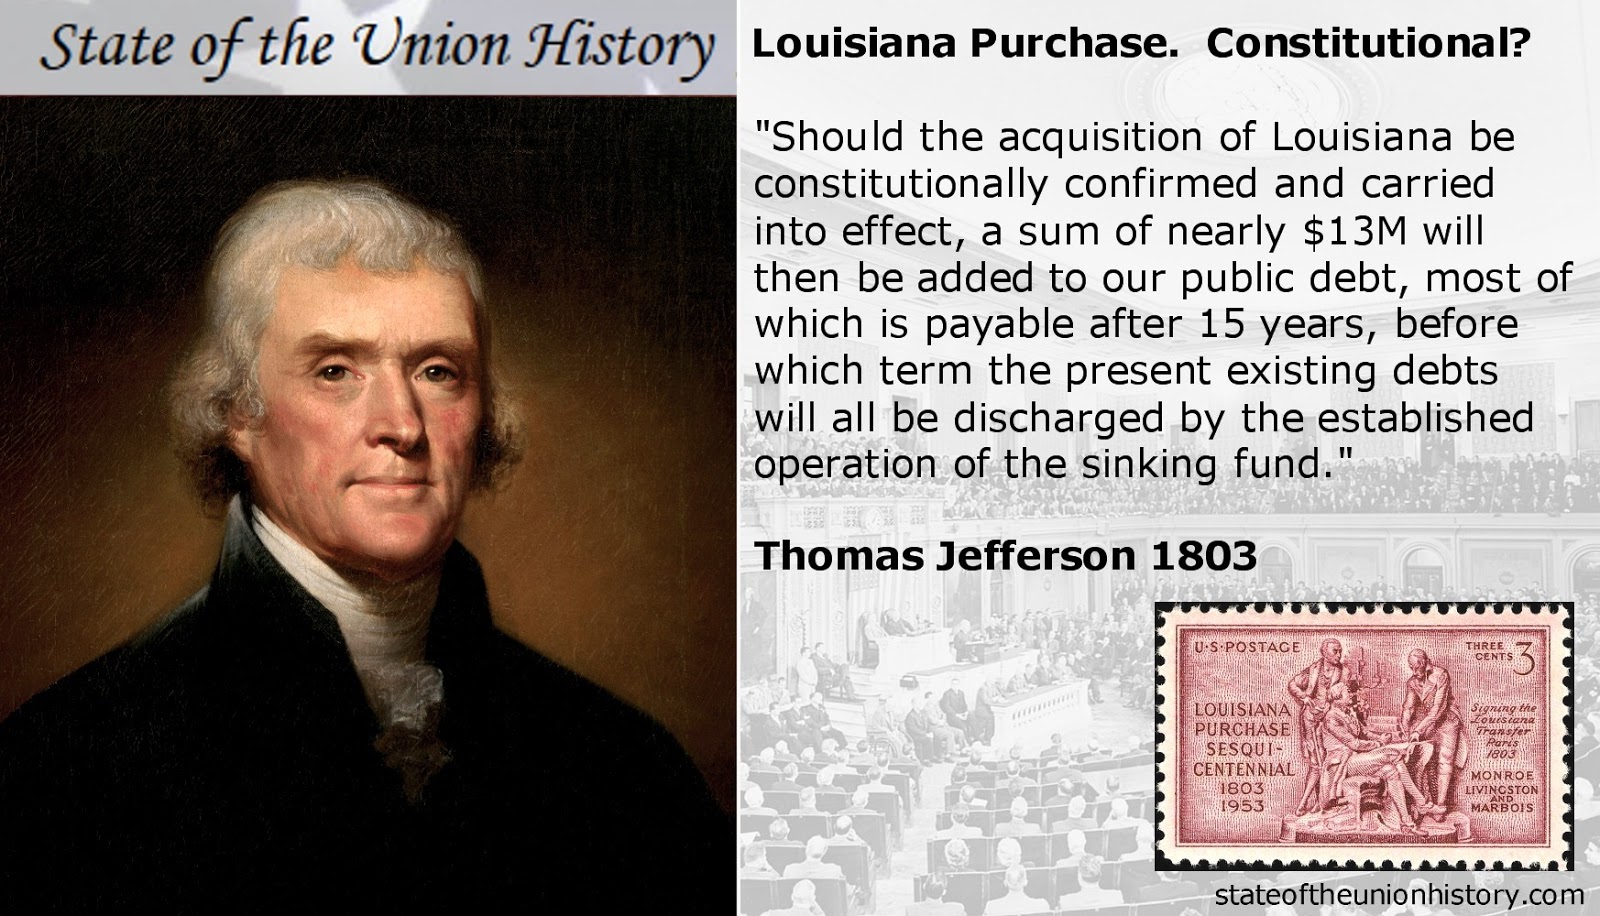 State of the Union History: 1803 Thomas Jefferson